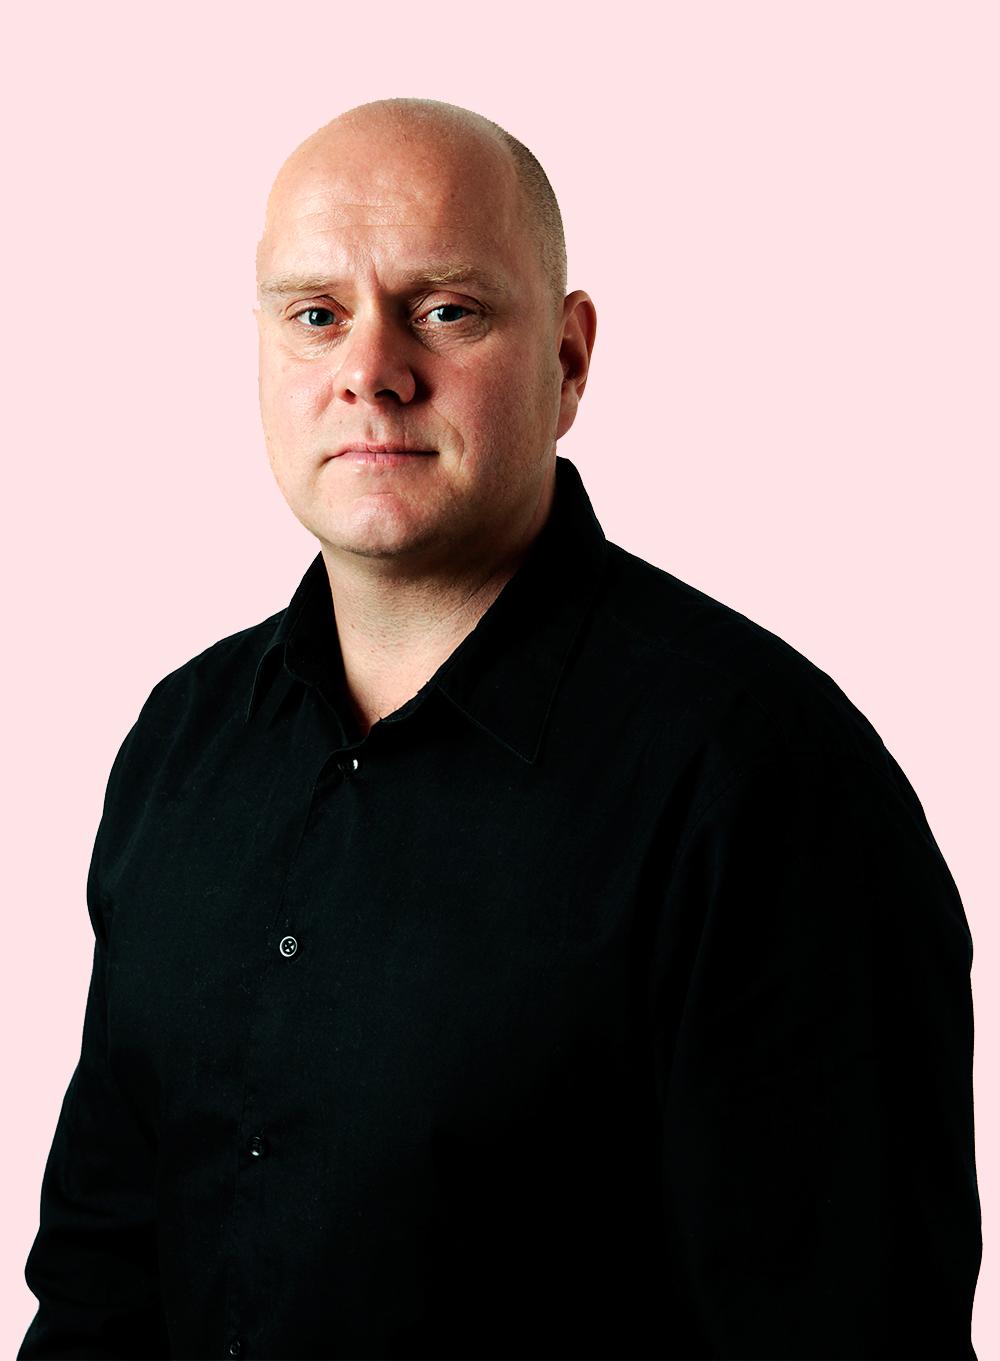 Sportbladets krönikör Tomas Ros.